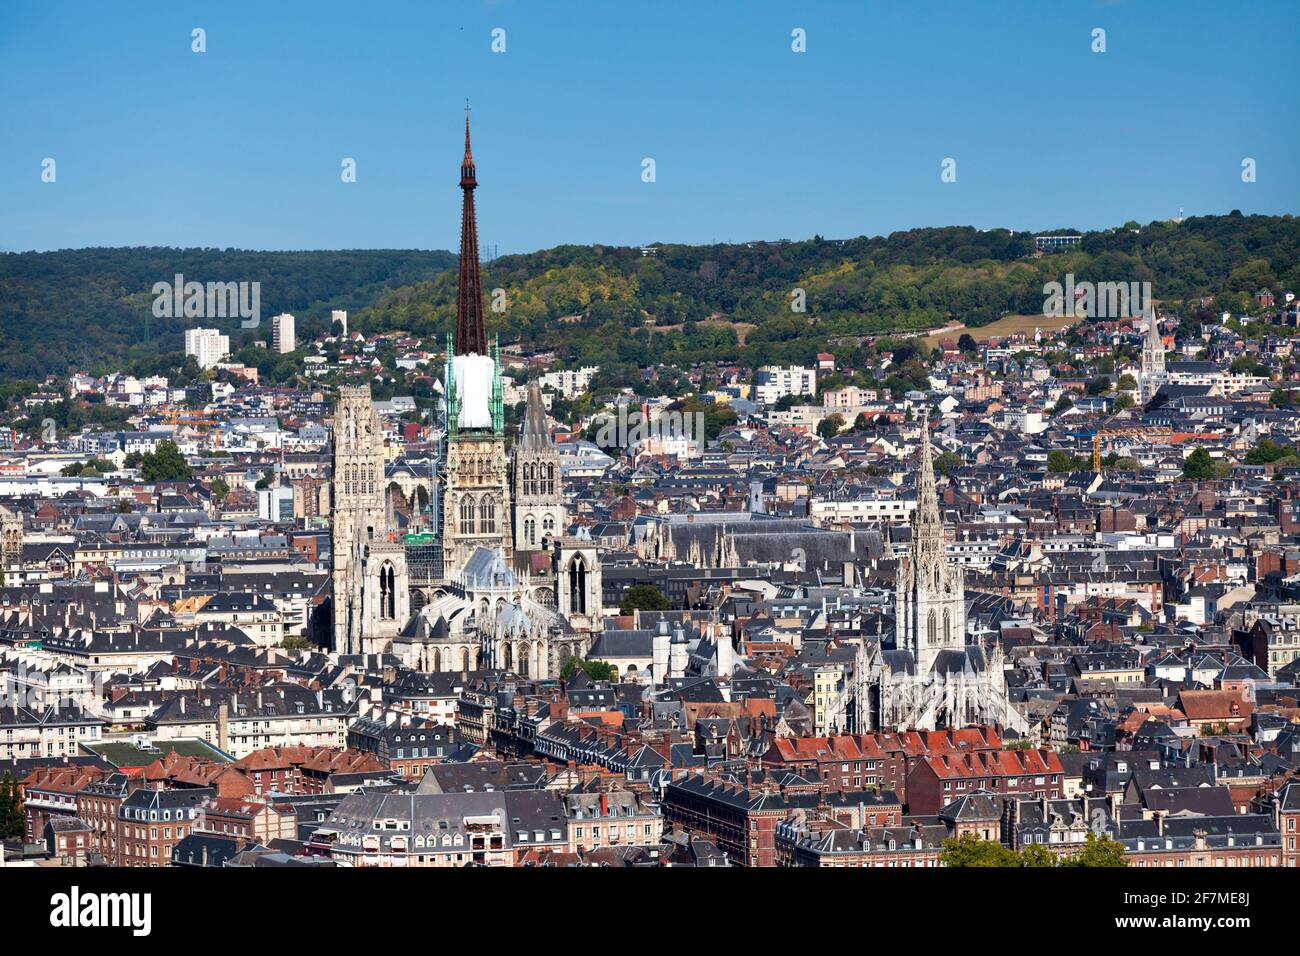 Vista aérea de la Catedral de Rouen y la iglesia de Saint-Maclou en Rouen, Normandía, Francia. Foto de stock